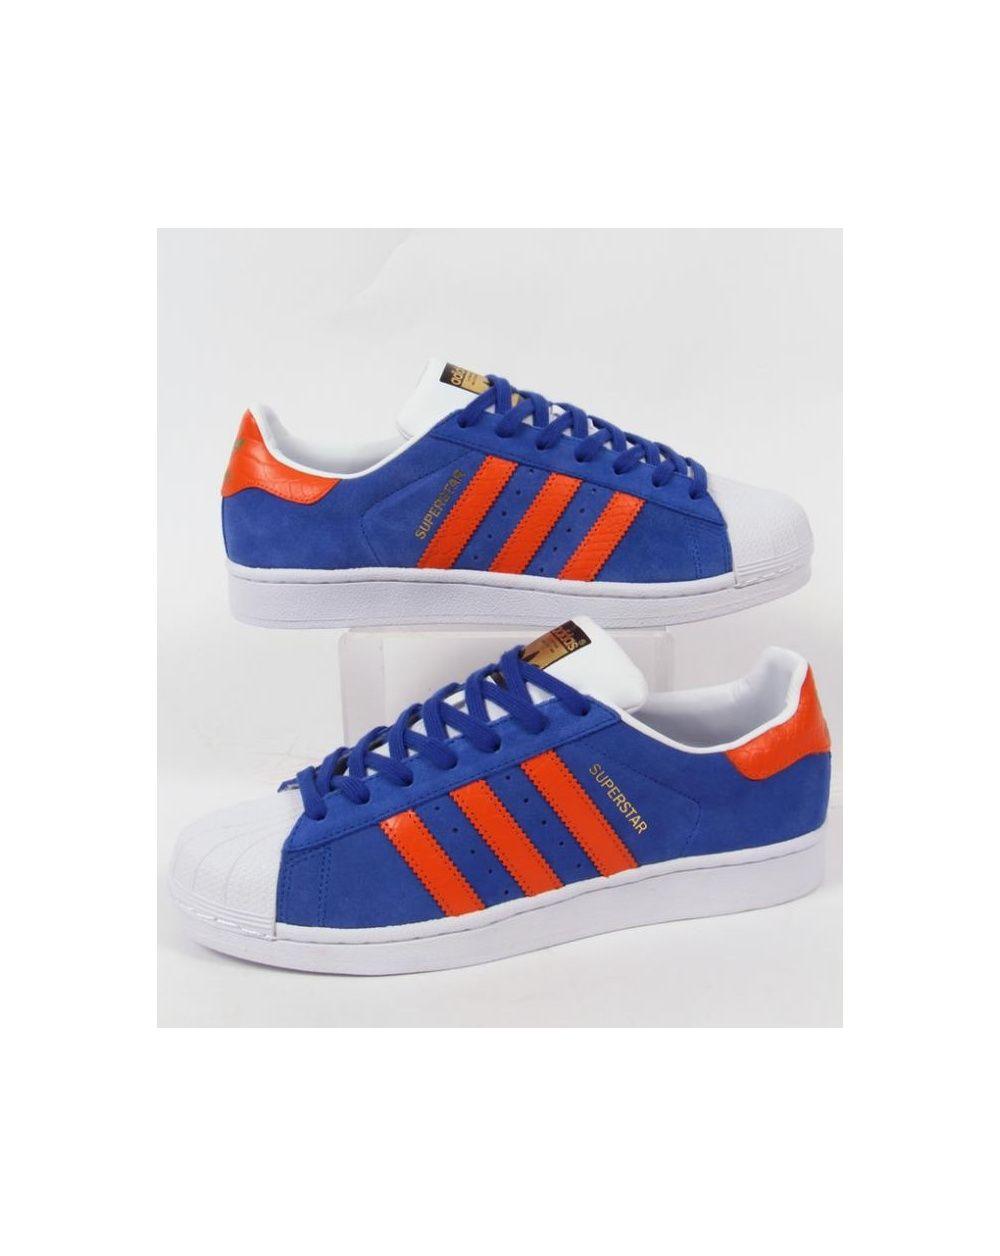 Blue and White with Orange Logo - Adidas Superstar Trainers Blue/orange/white, originals, shell toe ...